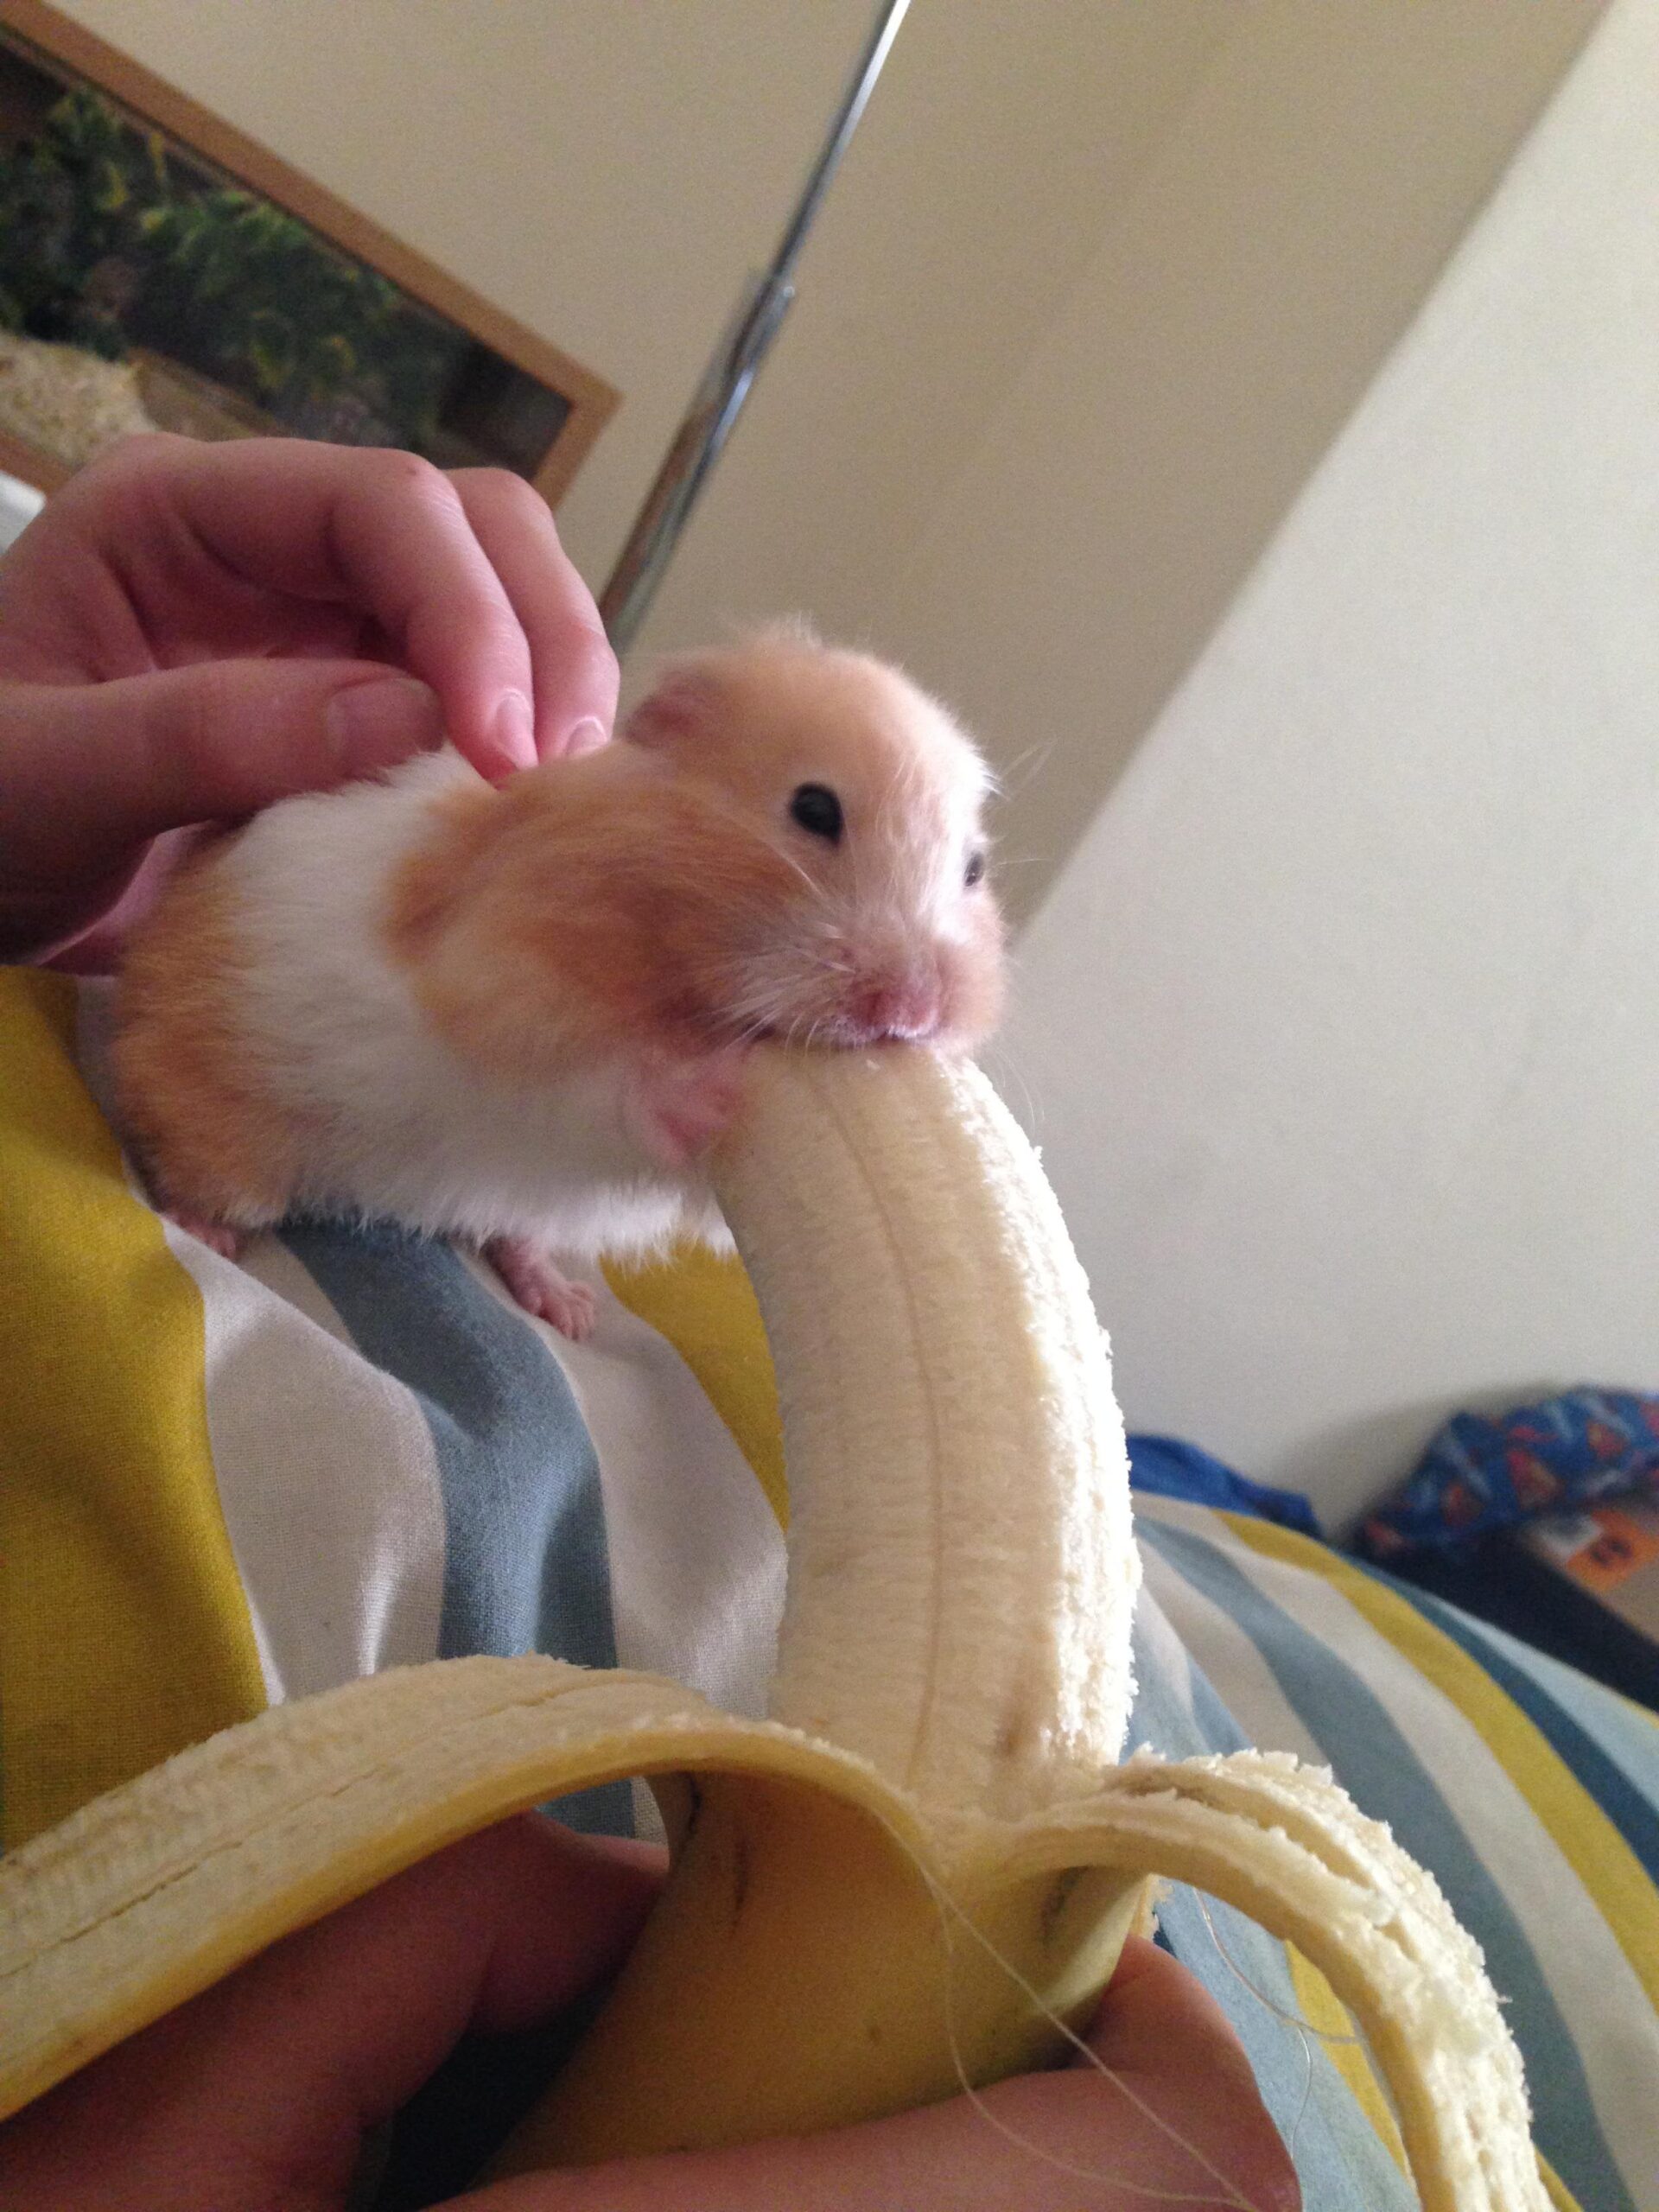 can a hamster eat banana